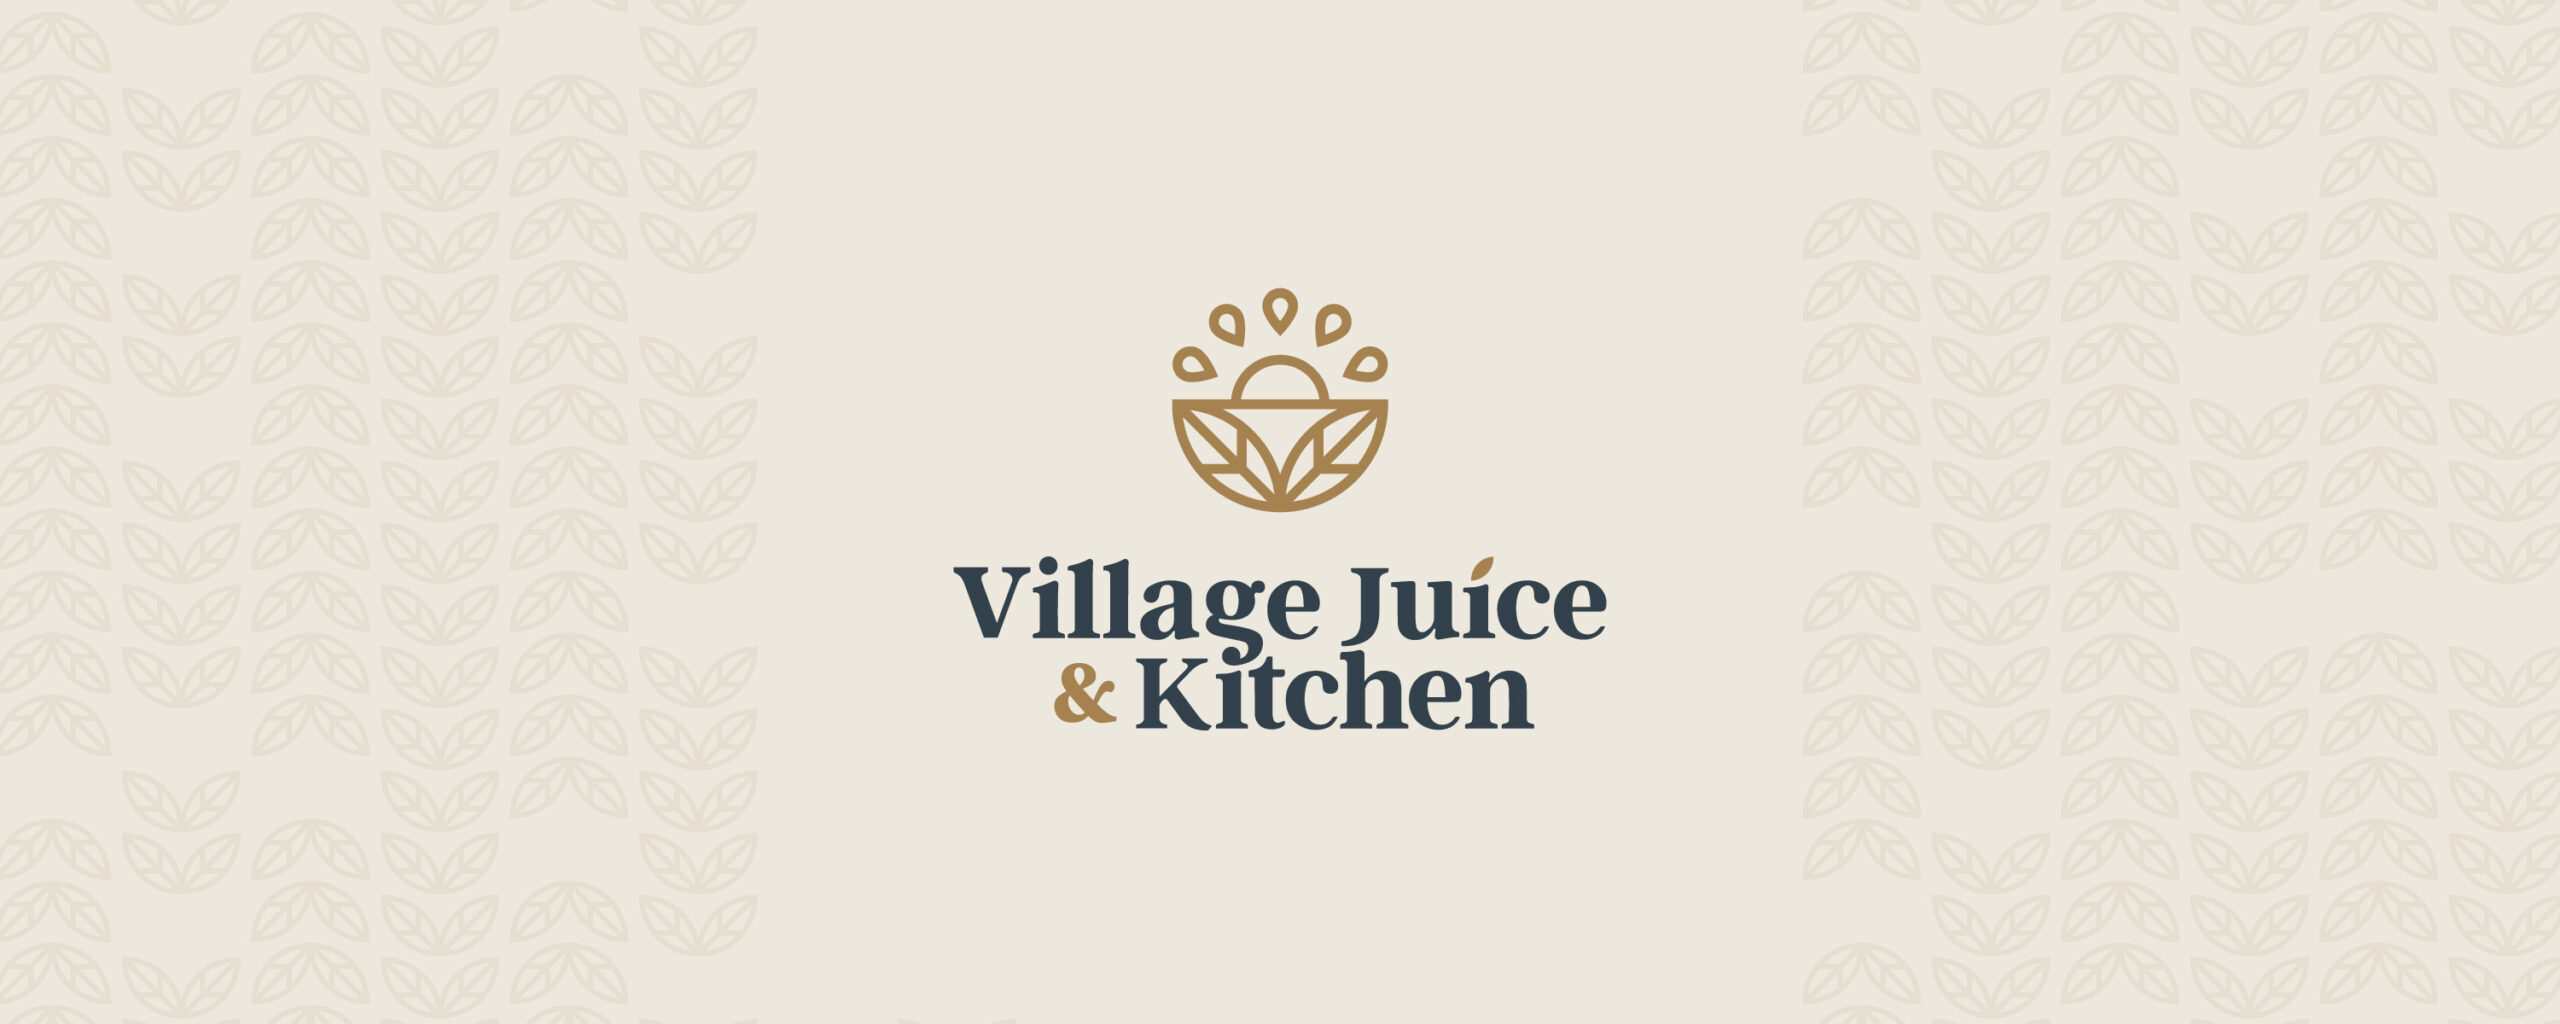 Featured image for “Village Juice & Kitchen”